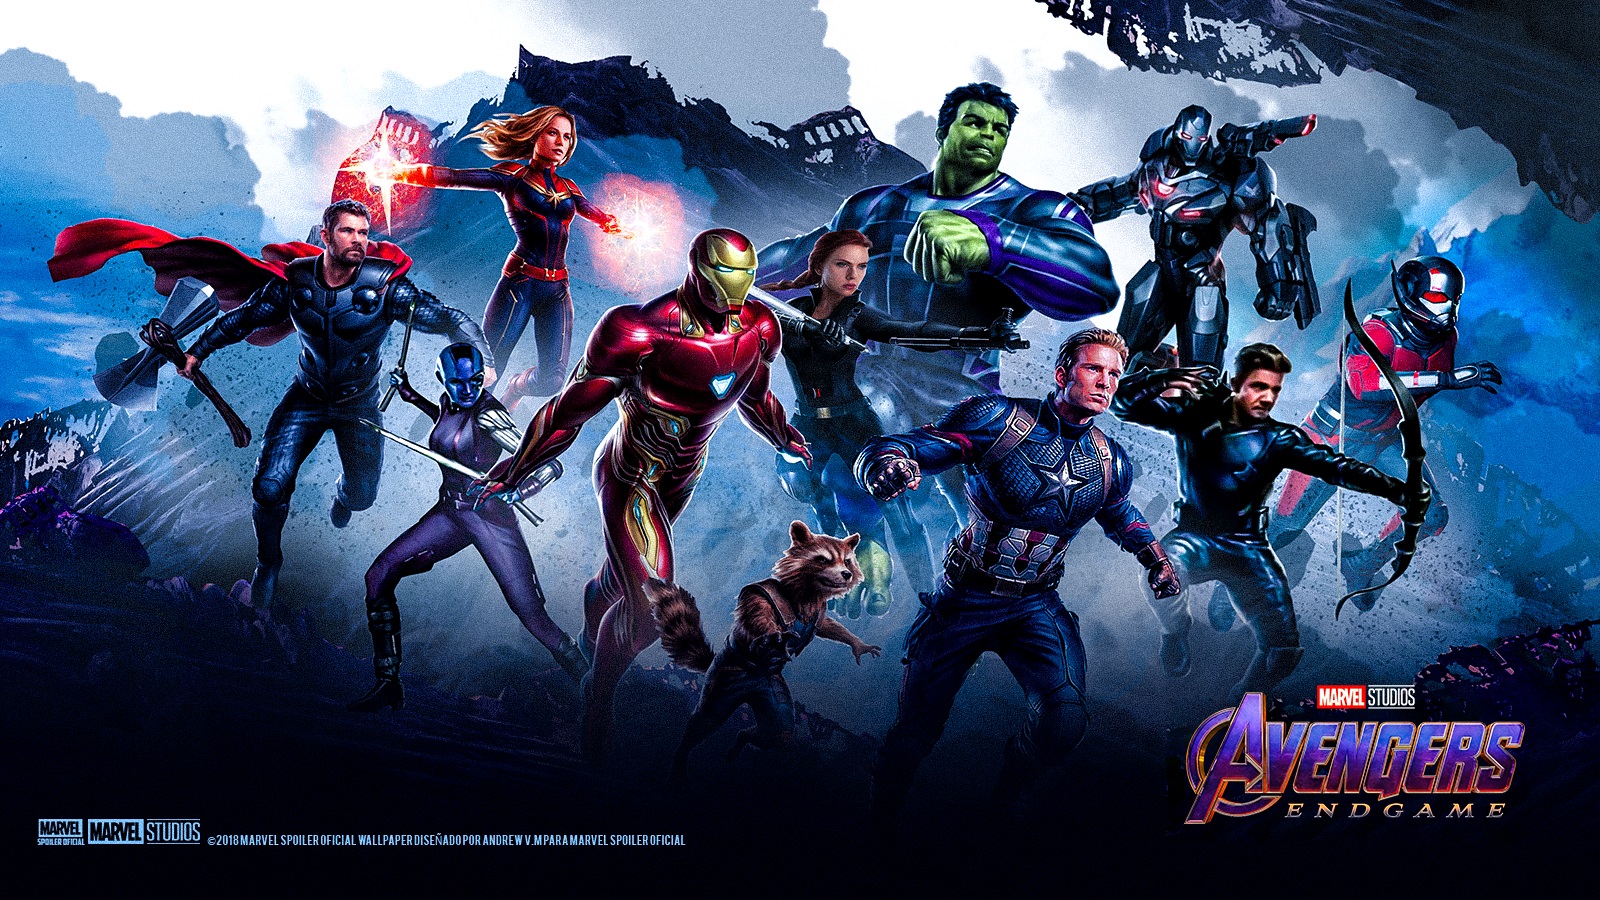 10 Best Avengers Endgame Wallpaper Hd Visual Arts Ideas